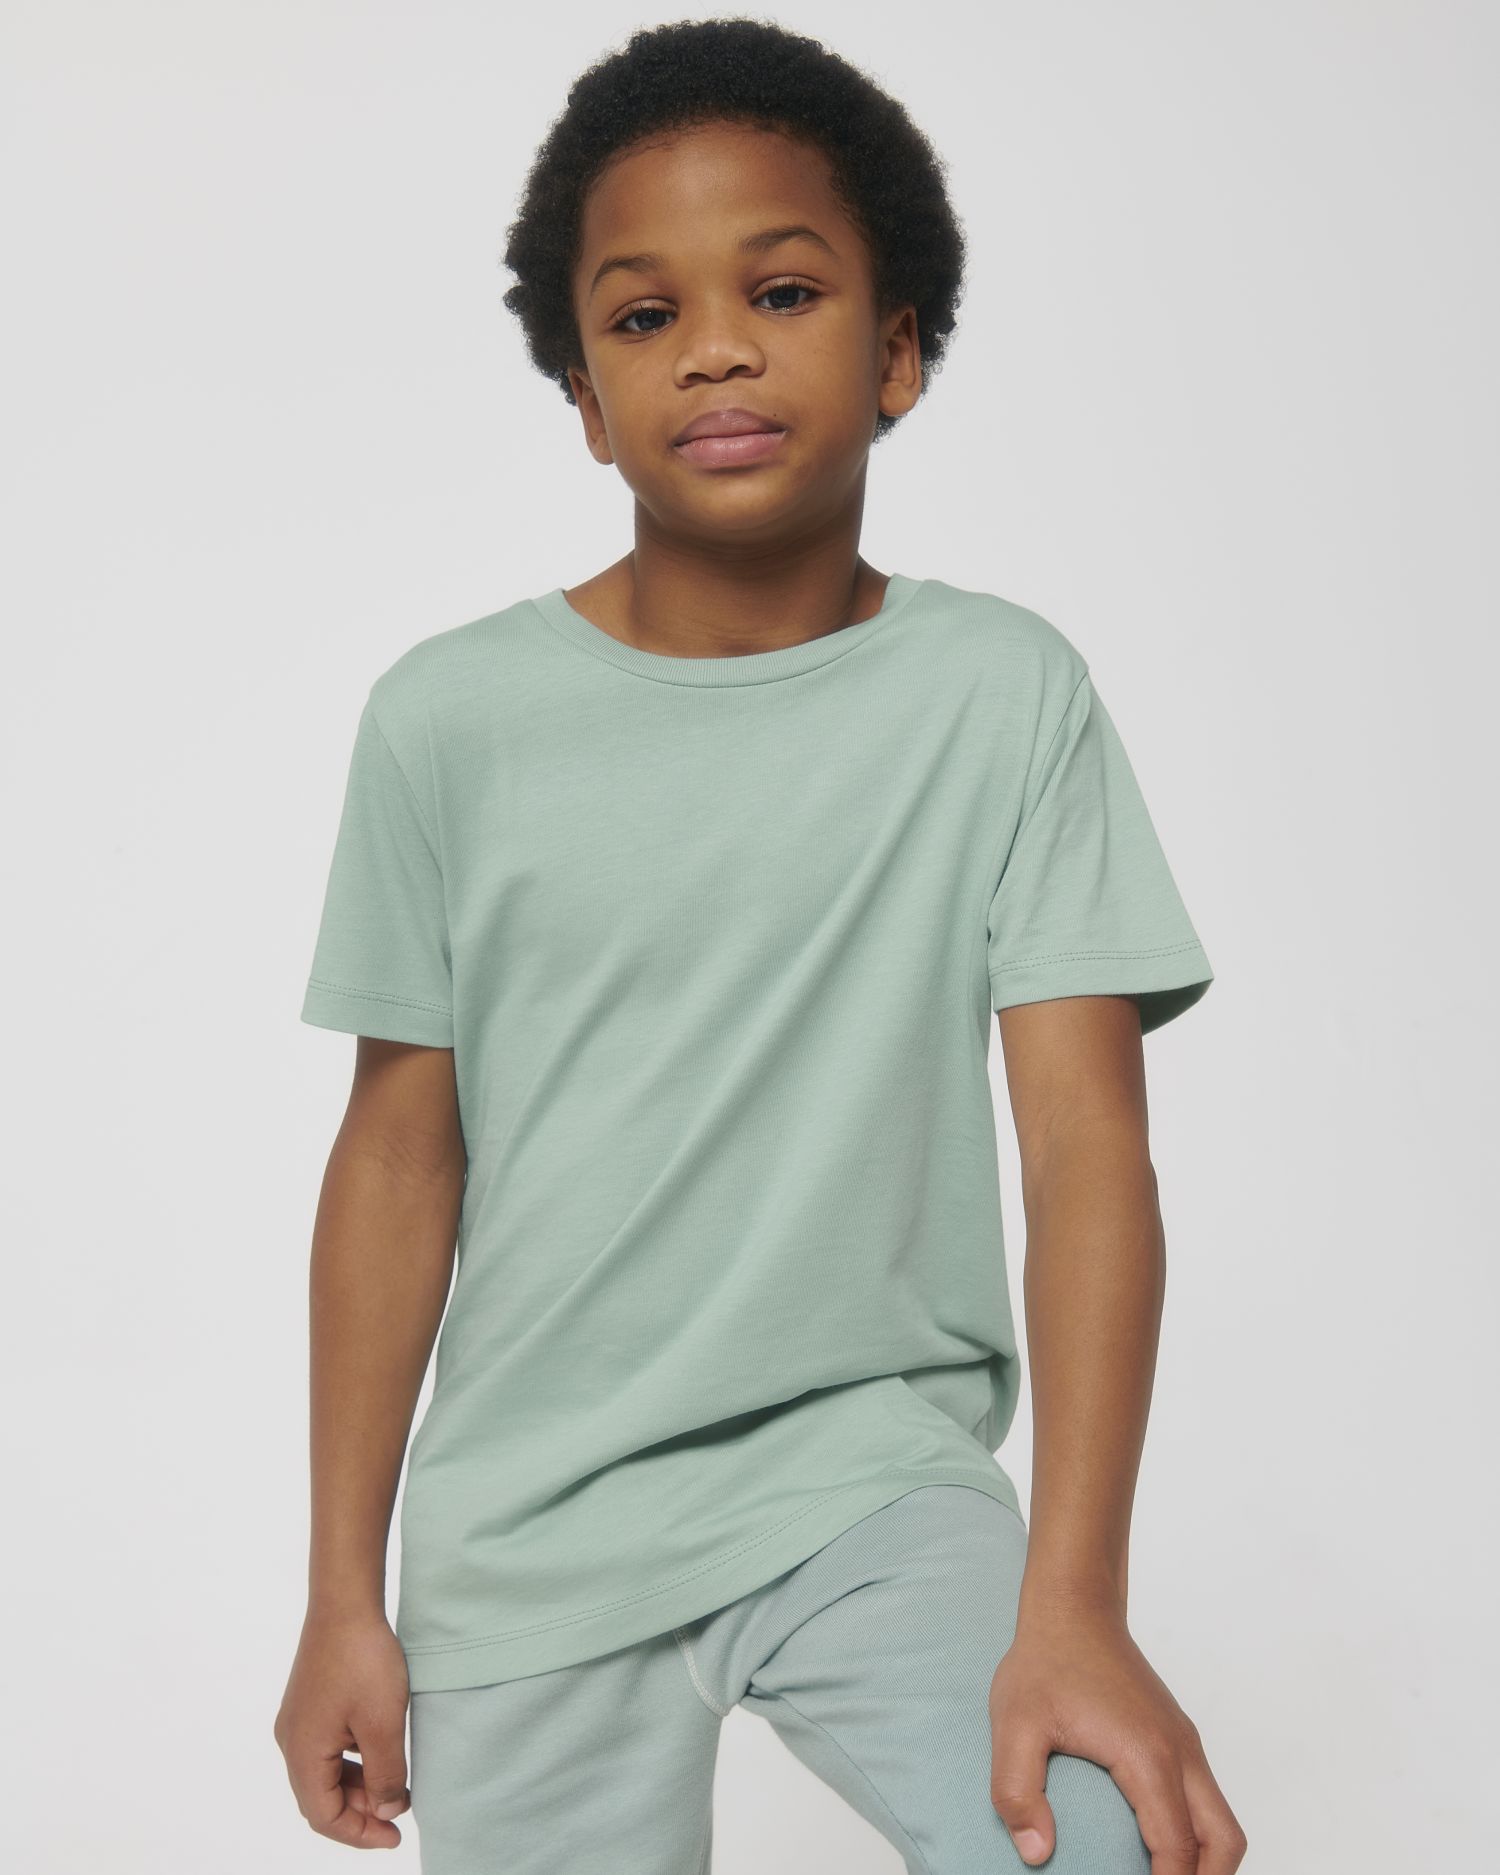 Kids T-Shirt Mini Creator in Farbe Aloe